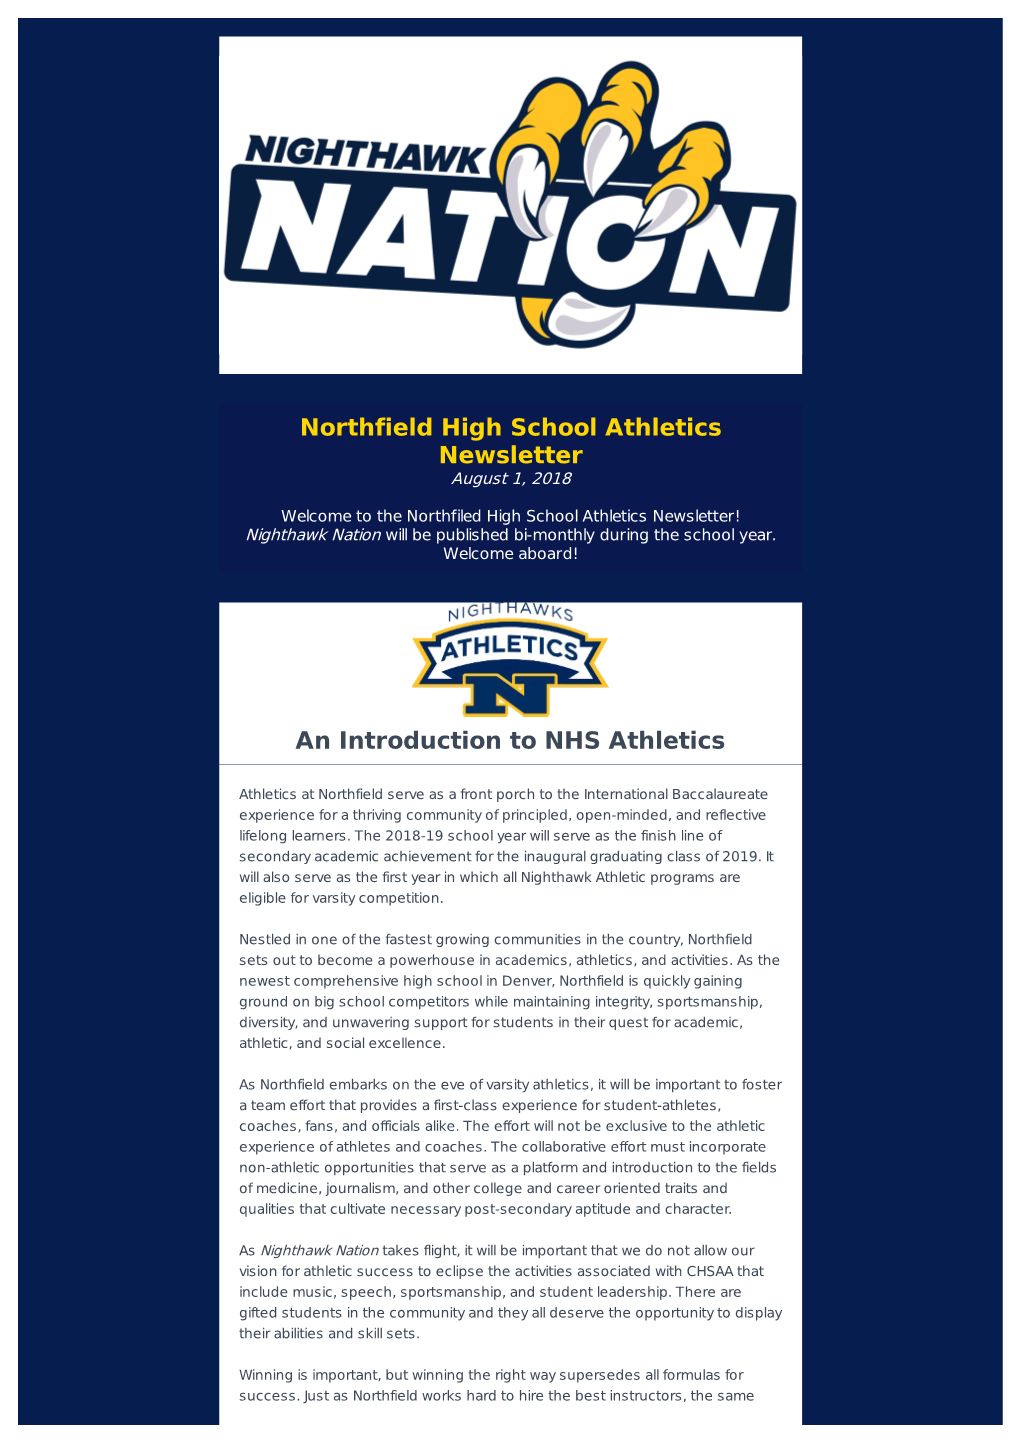 Northfield High School Athletics Newsletter August 1, 2018